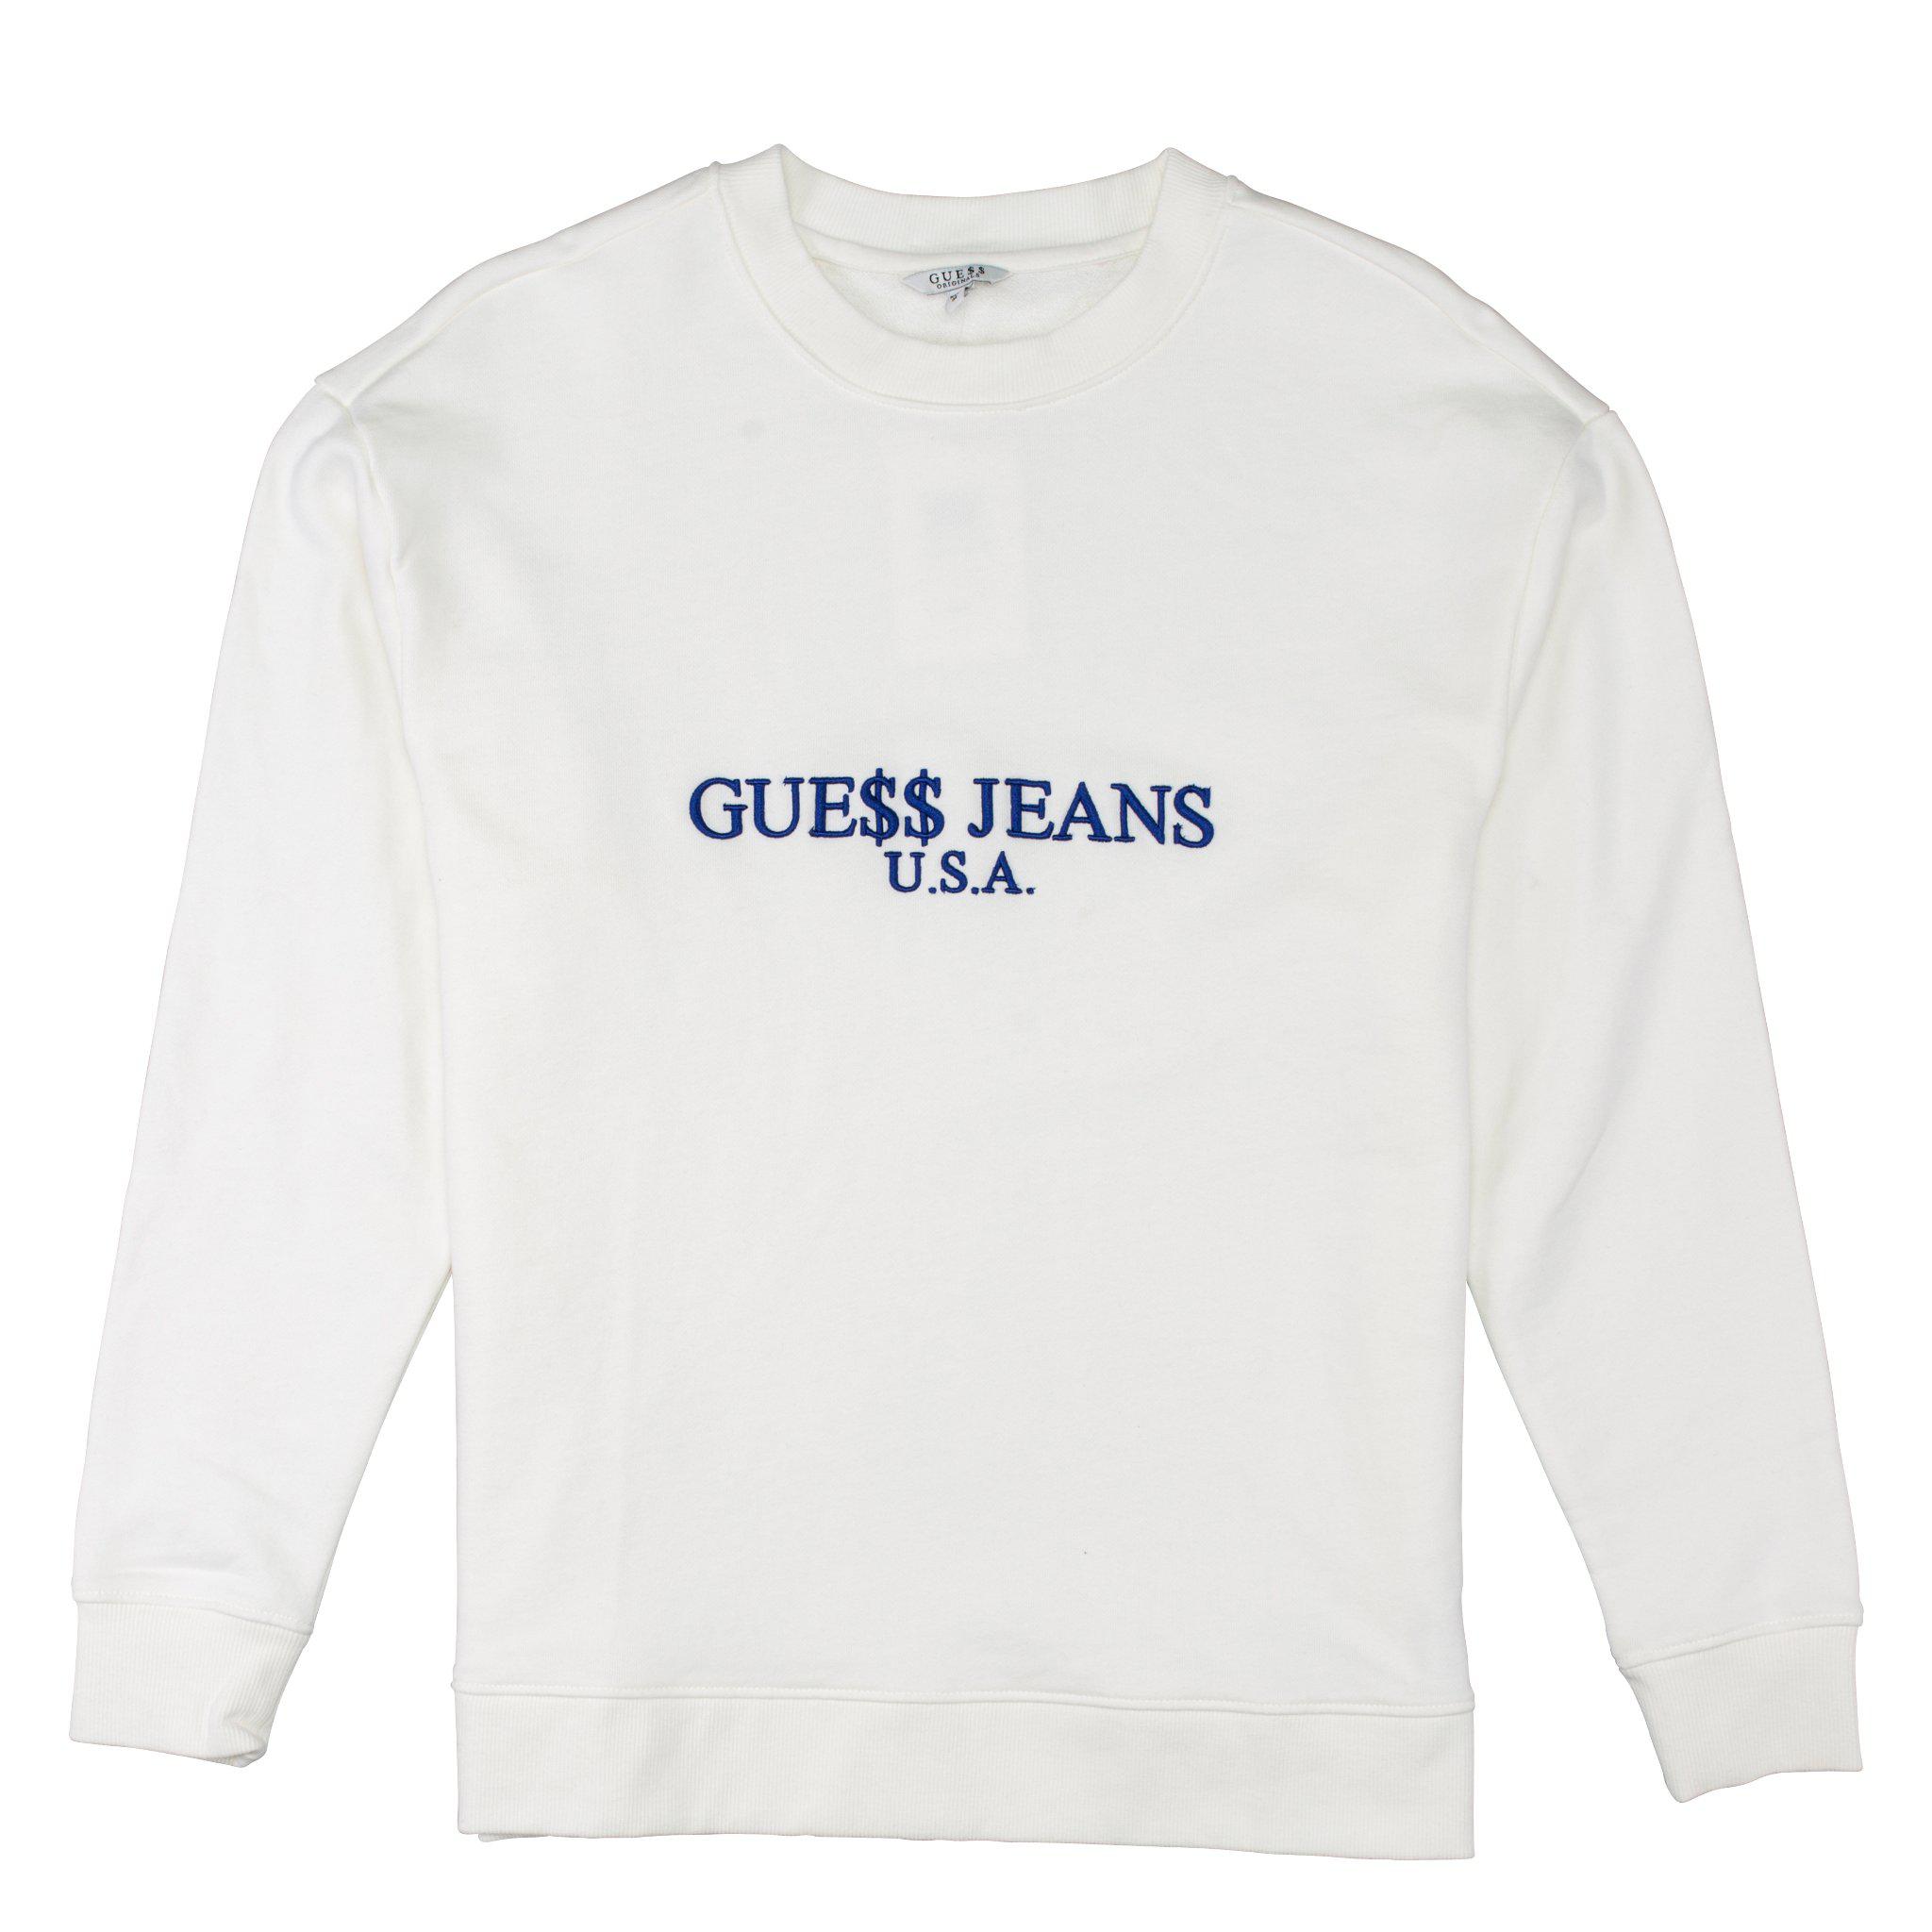 Guess Denim A$ap Usa Crewneck Sweatshirt in White for Men - Lyst